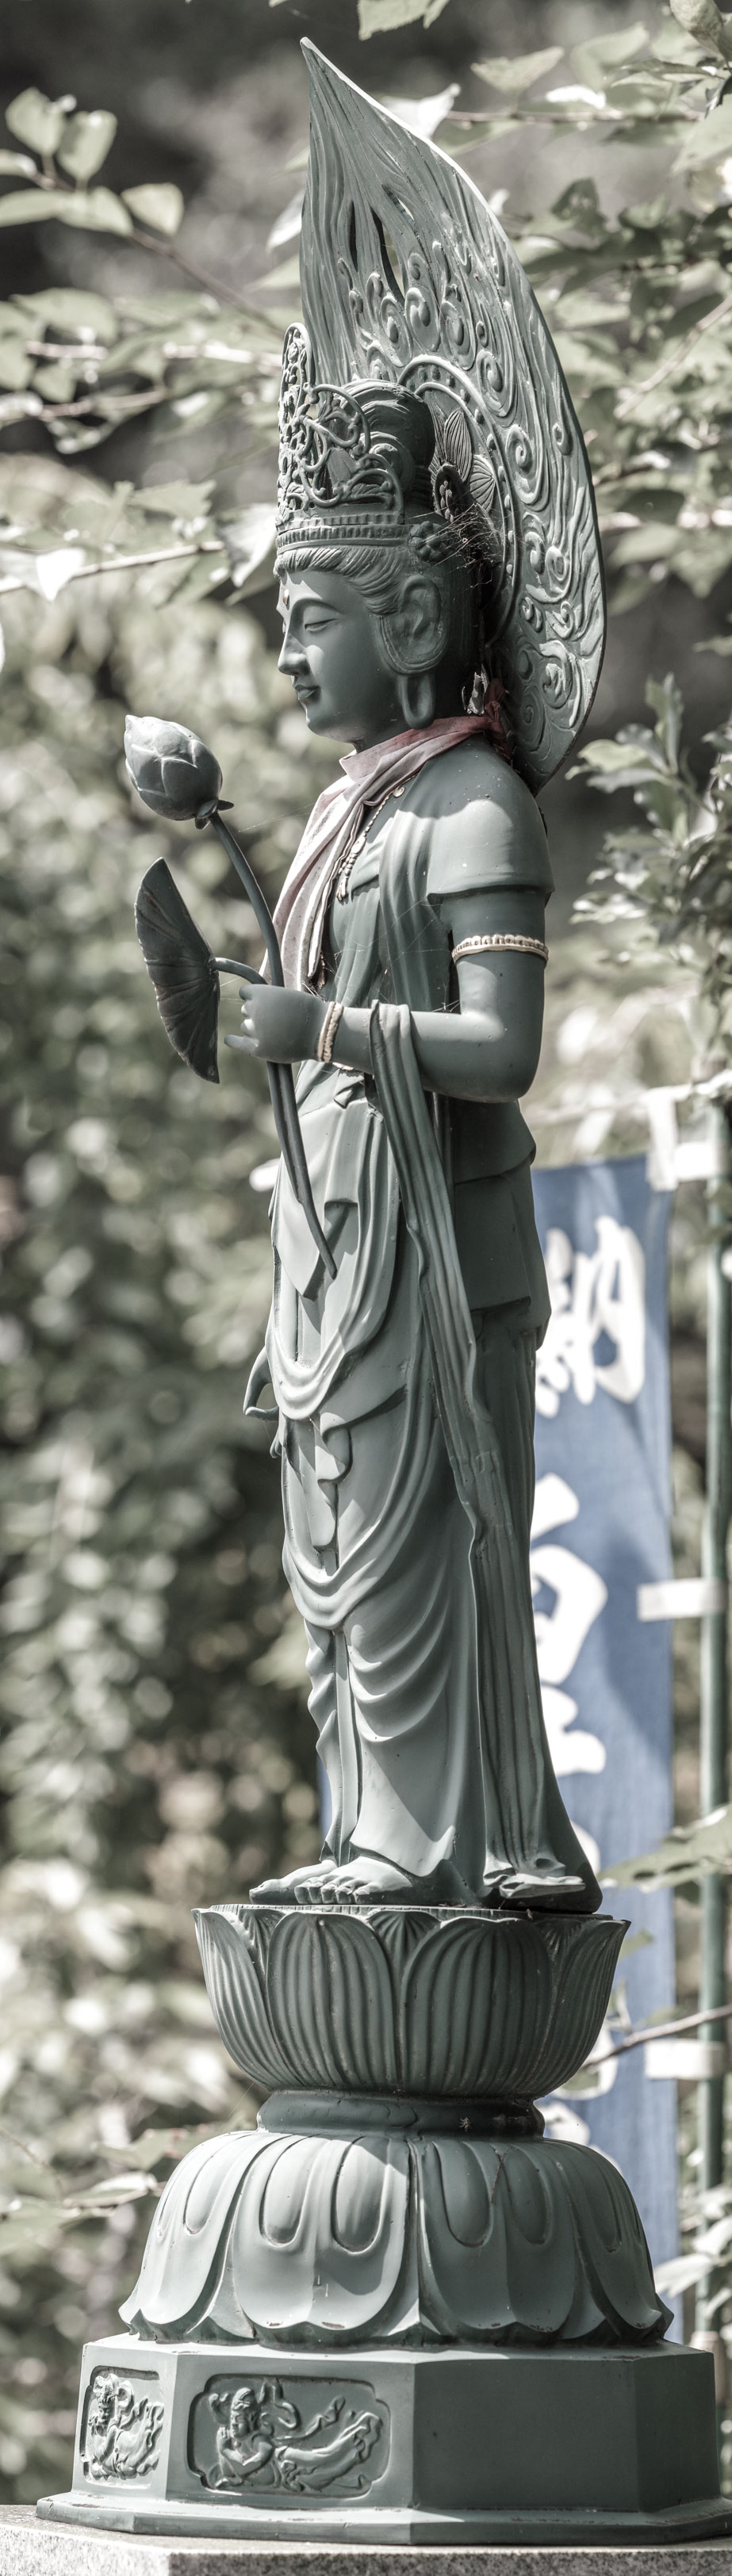 /Guewen/galeries/public/Voyages/Japon/Shikoku/Kobo-Daishi/statues/Kobo-daishi_040.jpg